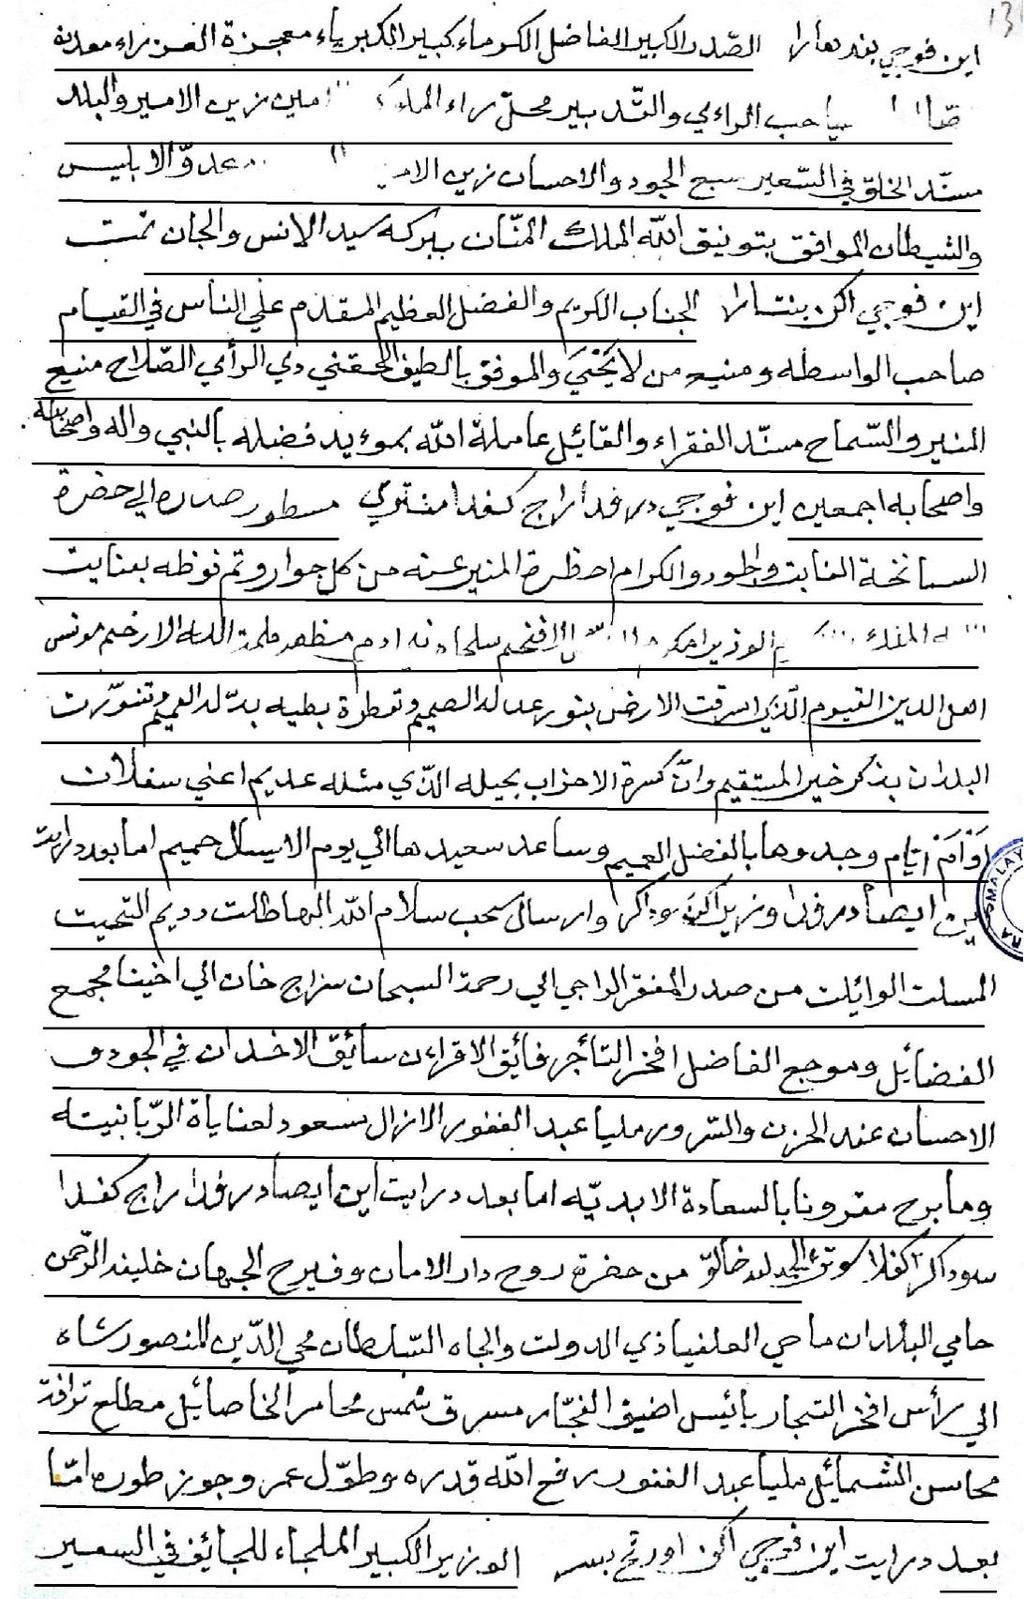 Rajah 5: Contoh penggunaan bahasa Arab dalam teks Teks-teks yang bergaris dalam Rajah 5 merupakan ayat bahasa Arab yang digunakan dalam teks Undang-Undang Adat Negeri Kedah.